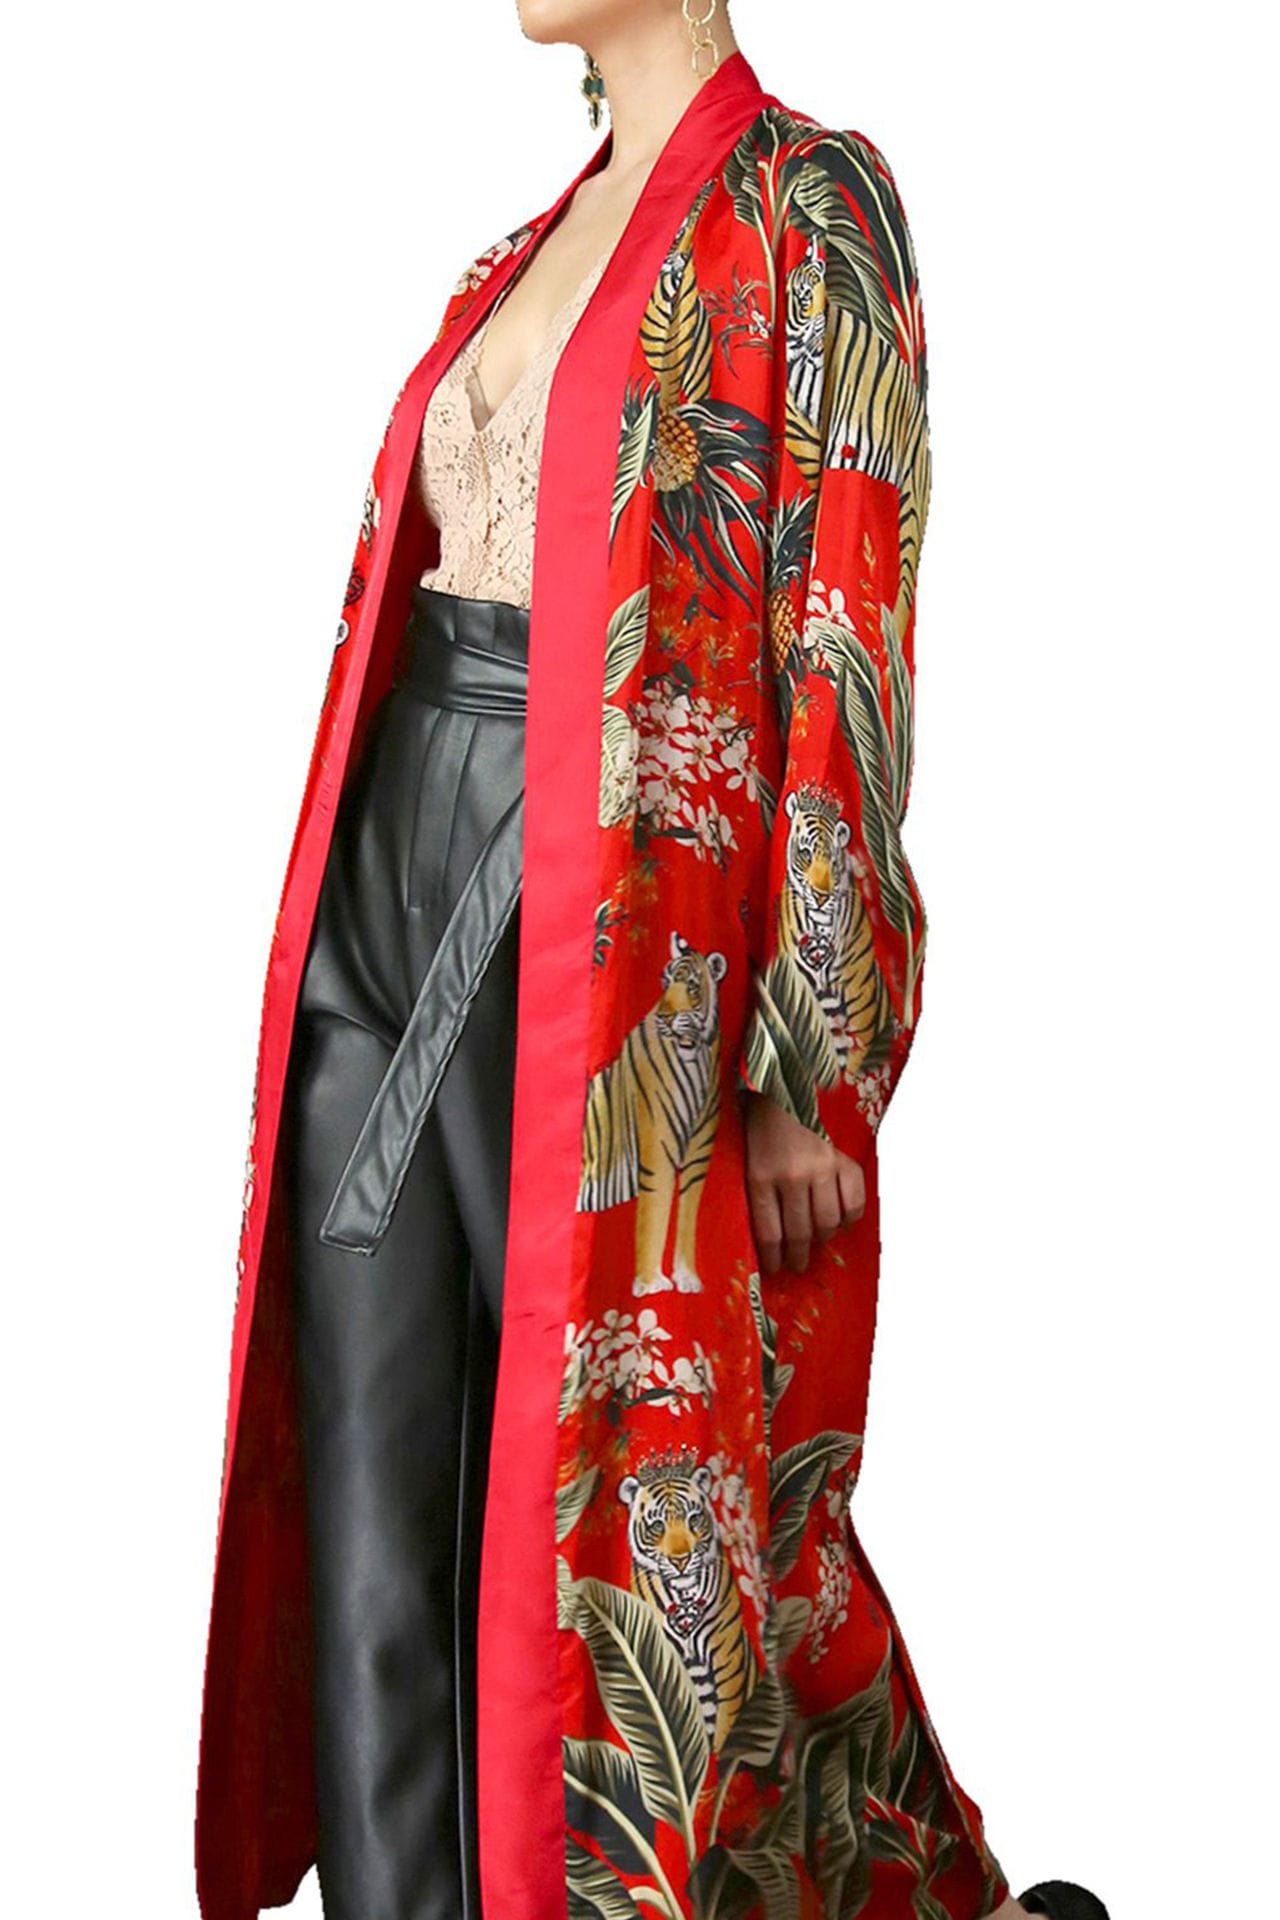 "Kyle X Shahida" "womens long kimono robe," "womens long kimono robe" "animal print robe" "plus size kimono" "womens long kimono"